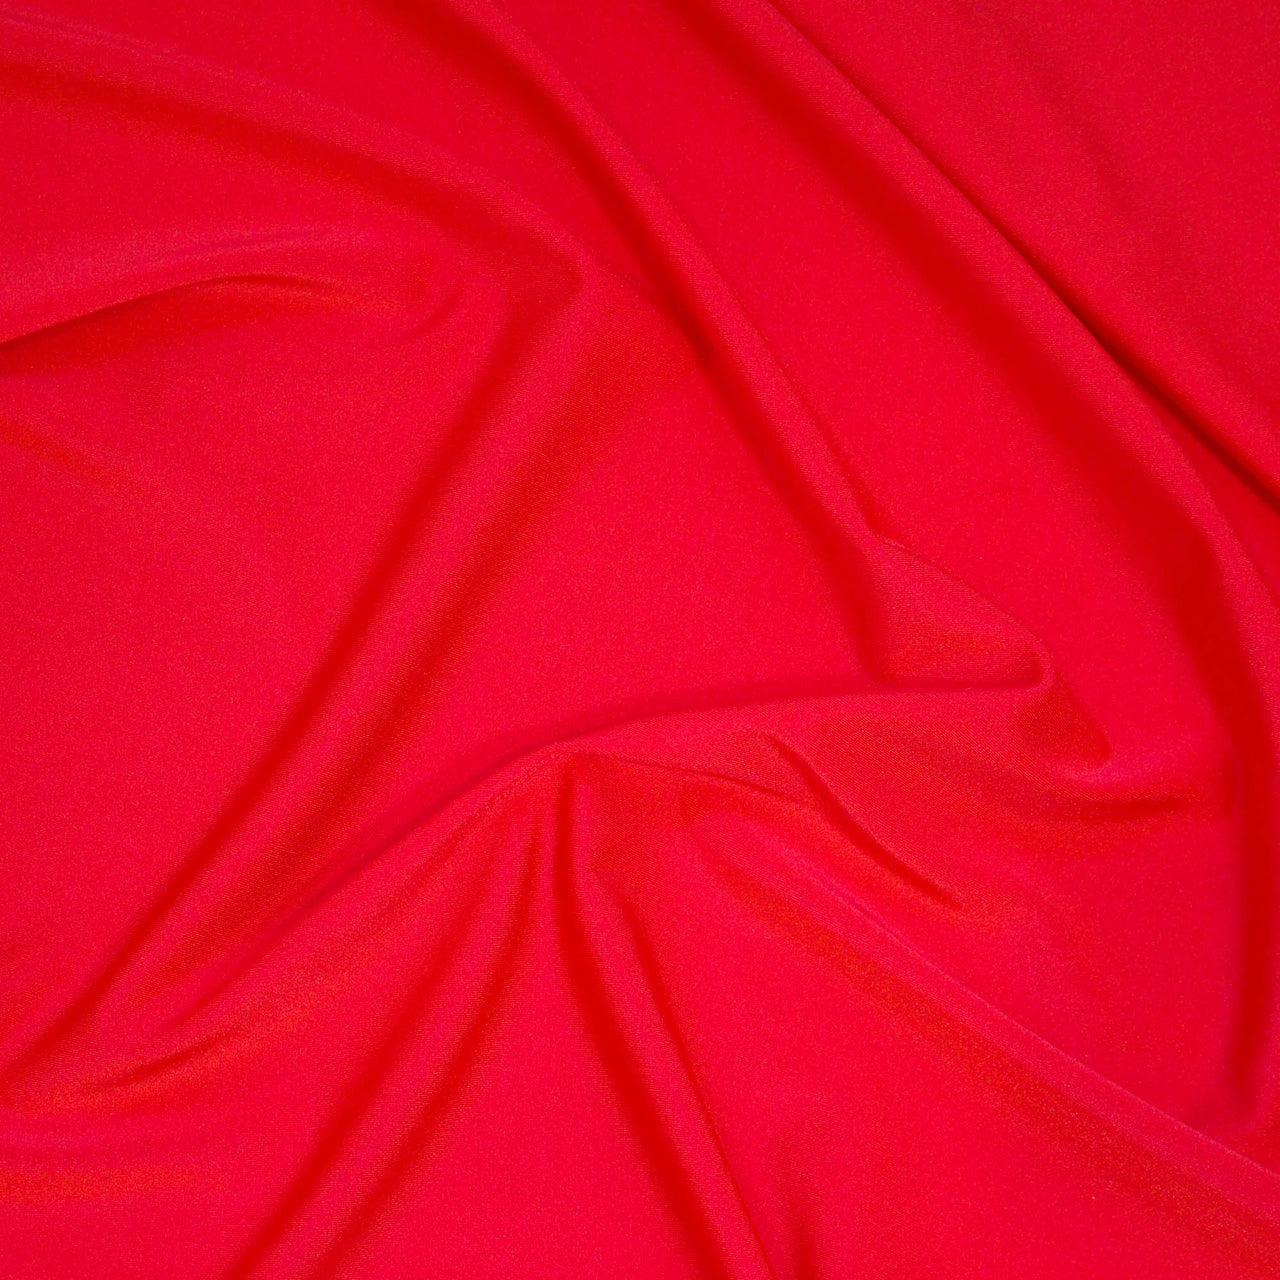 Red - Nylon Spandex Fabric - 4 Way All Way Stretch Superior Quality - Leotards, Dancewear